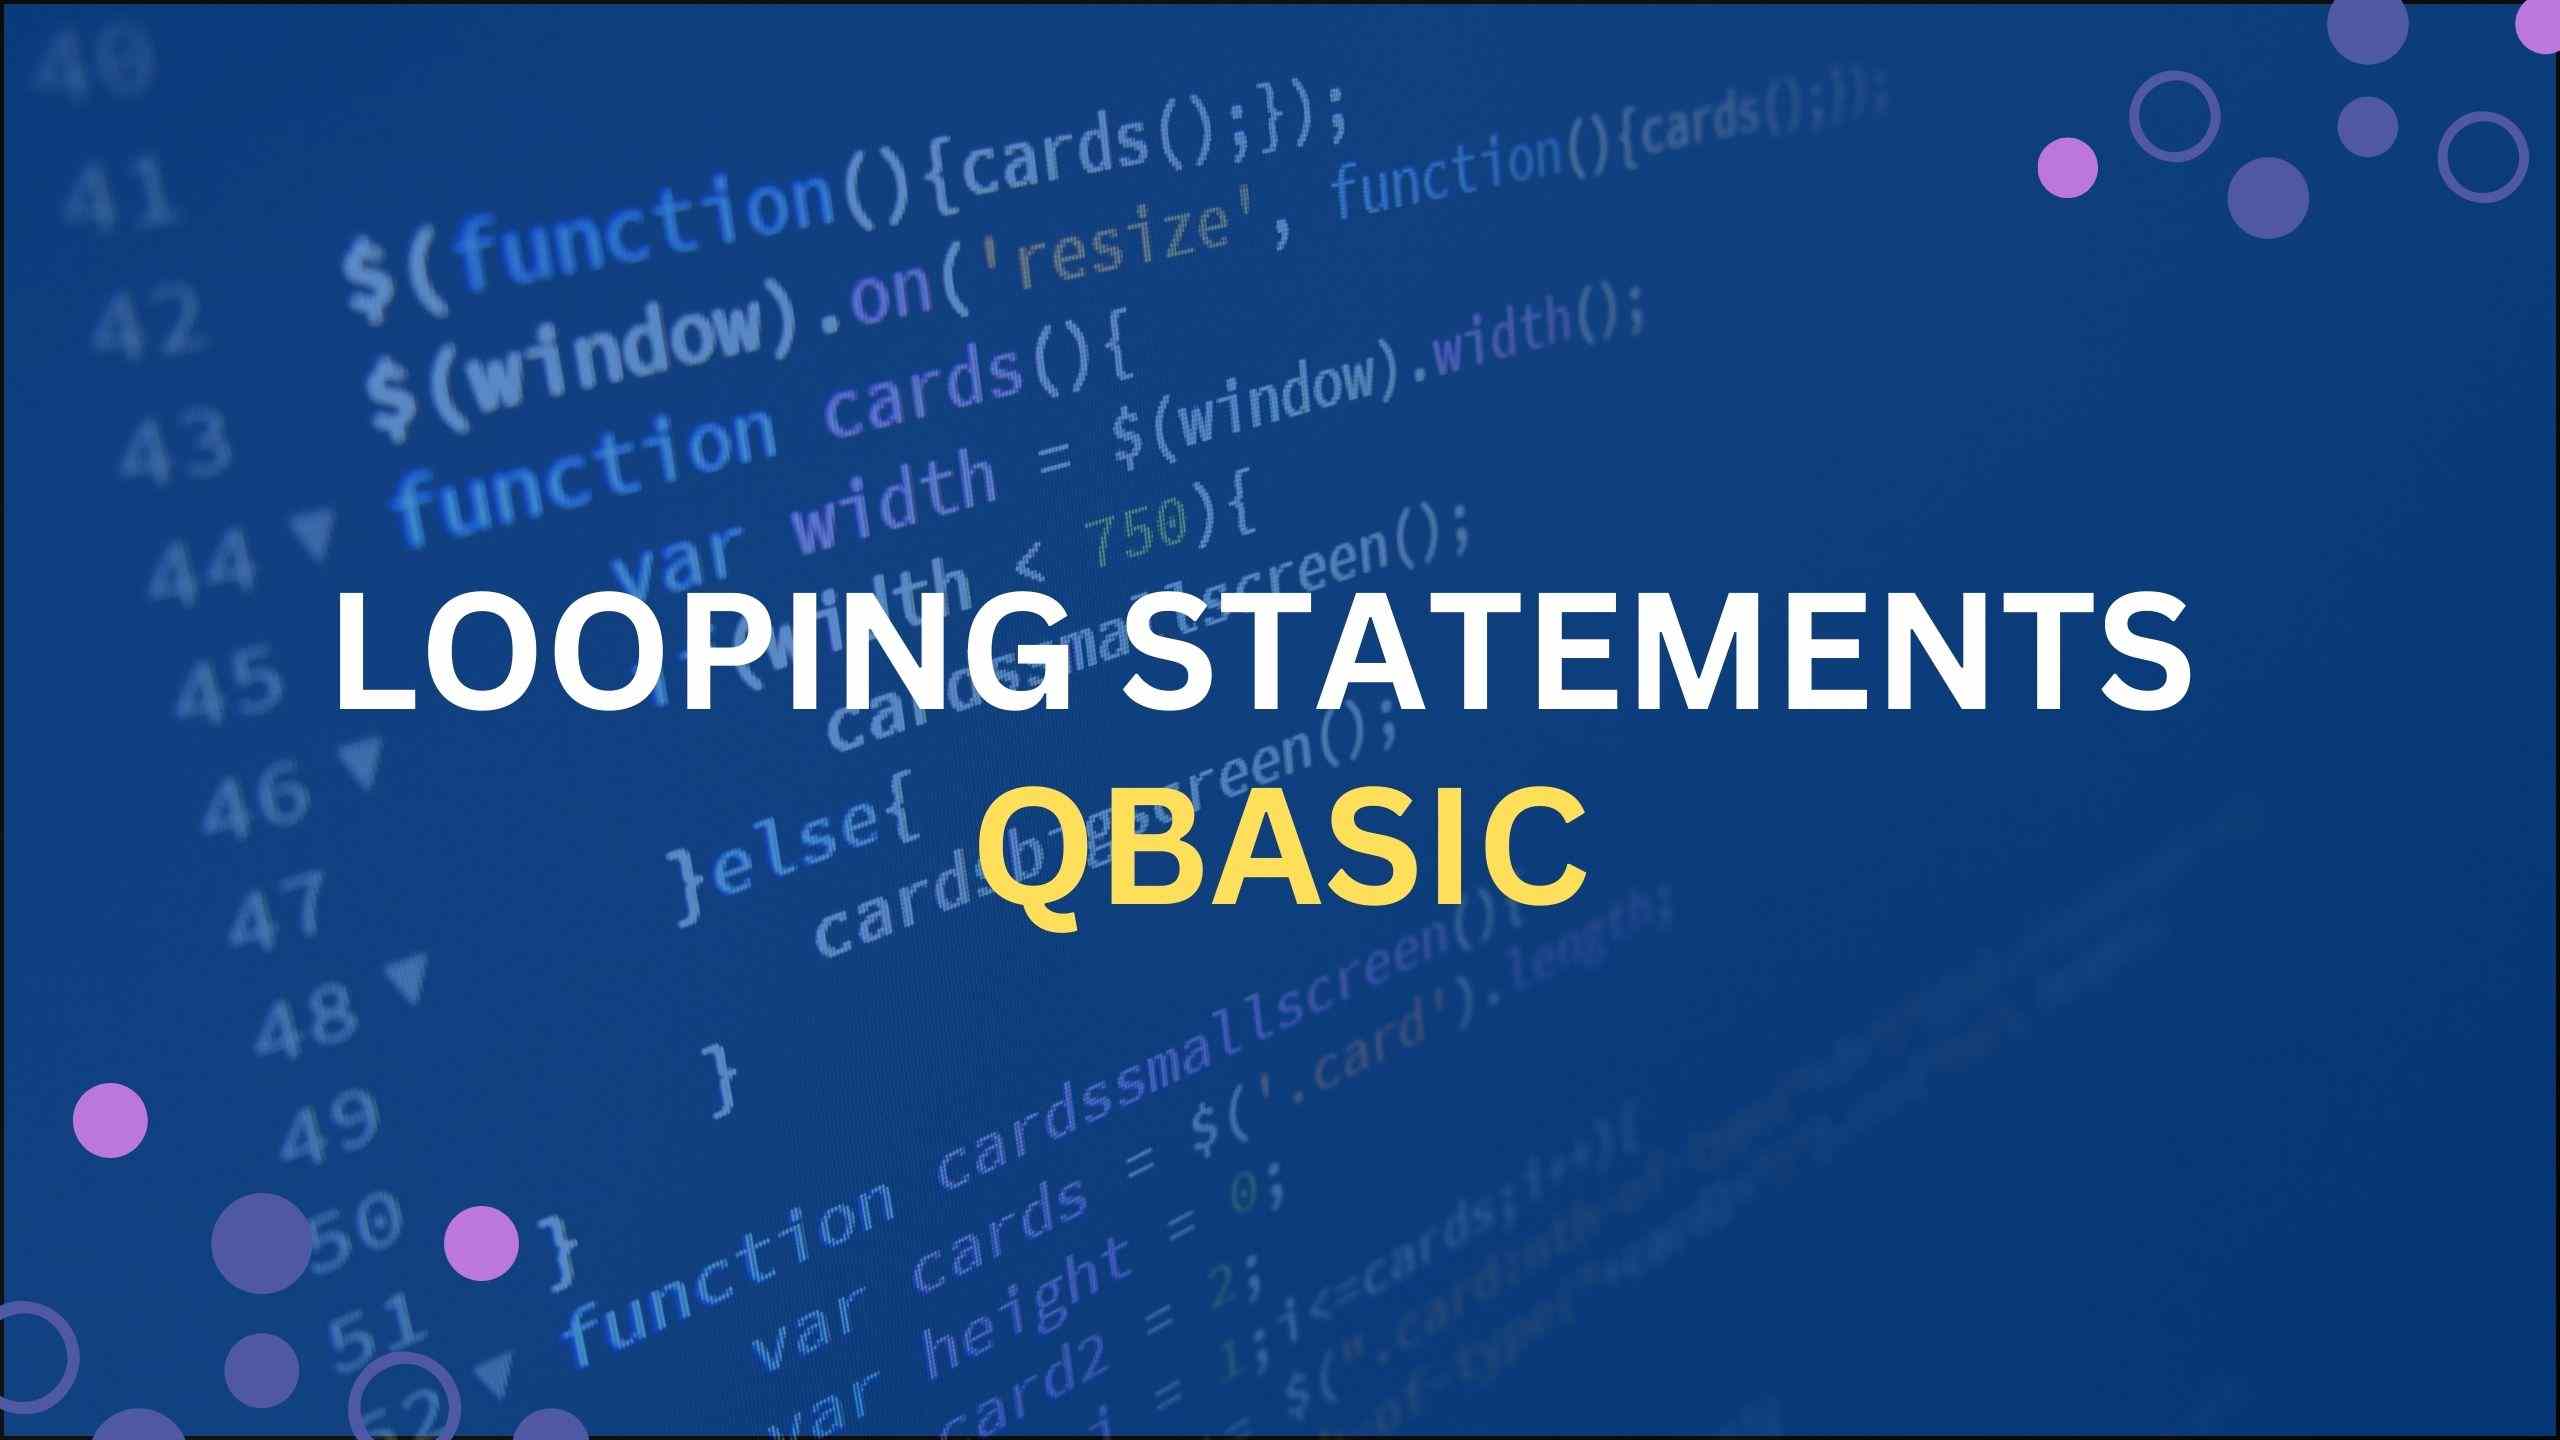 Qbasic Looping statements